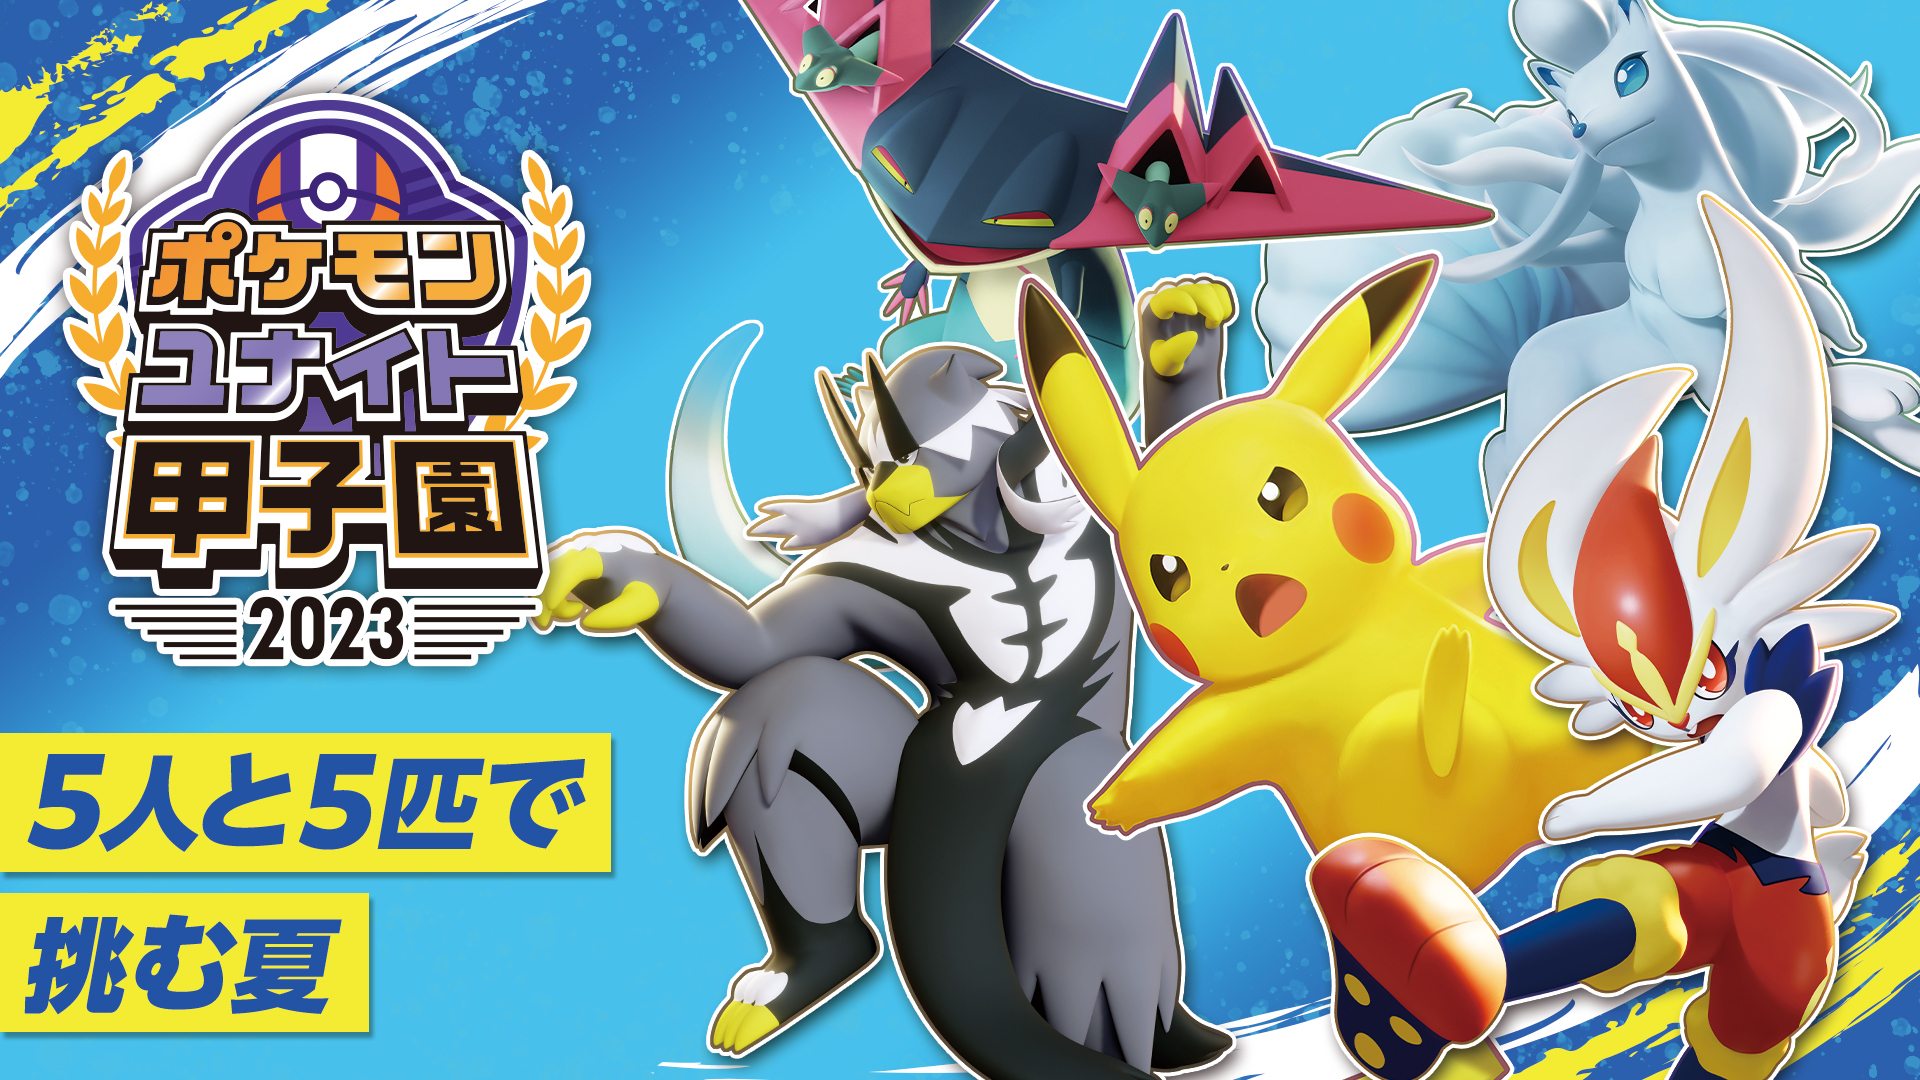 Pokémon UNITE - Koshien 2023 promotional image